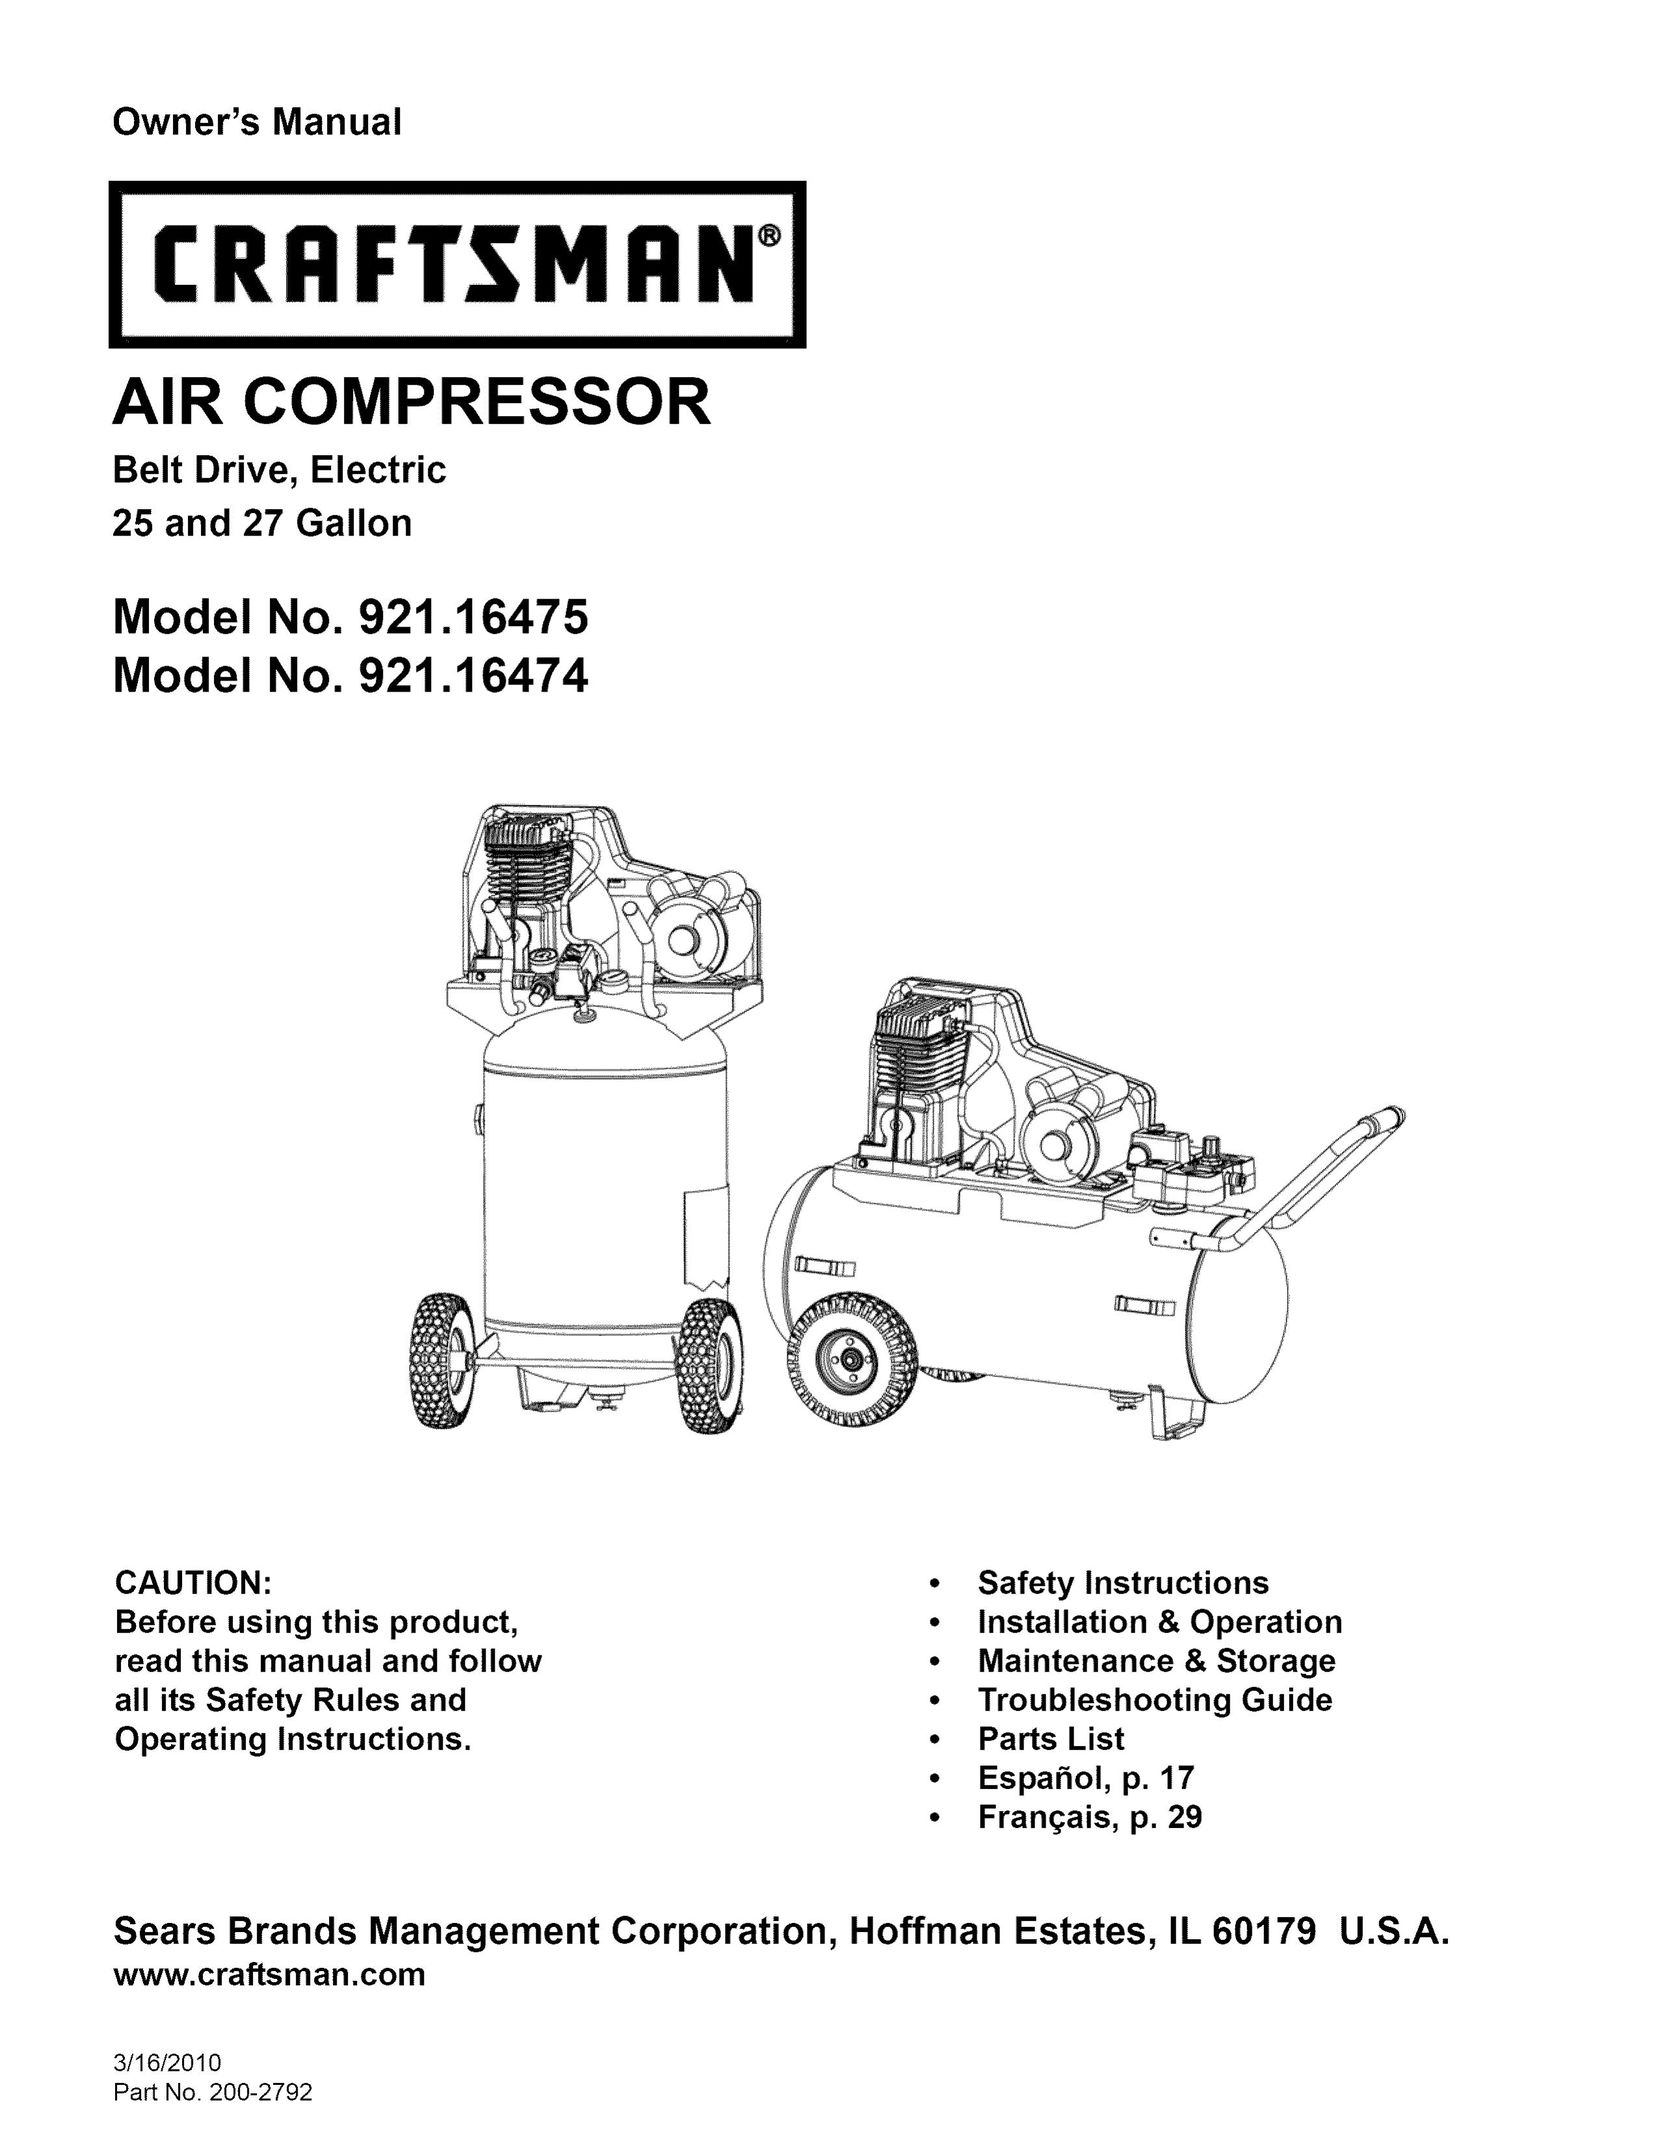 Craftsman 921.16474 Air Compressor User Manual